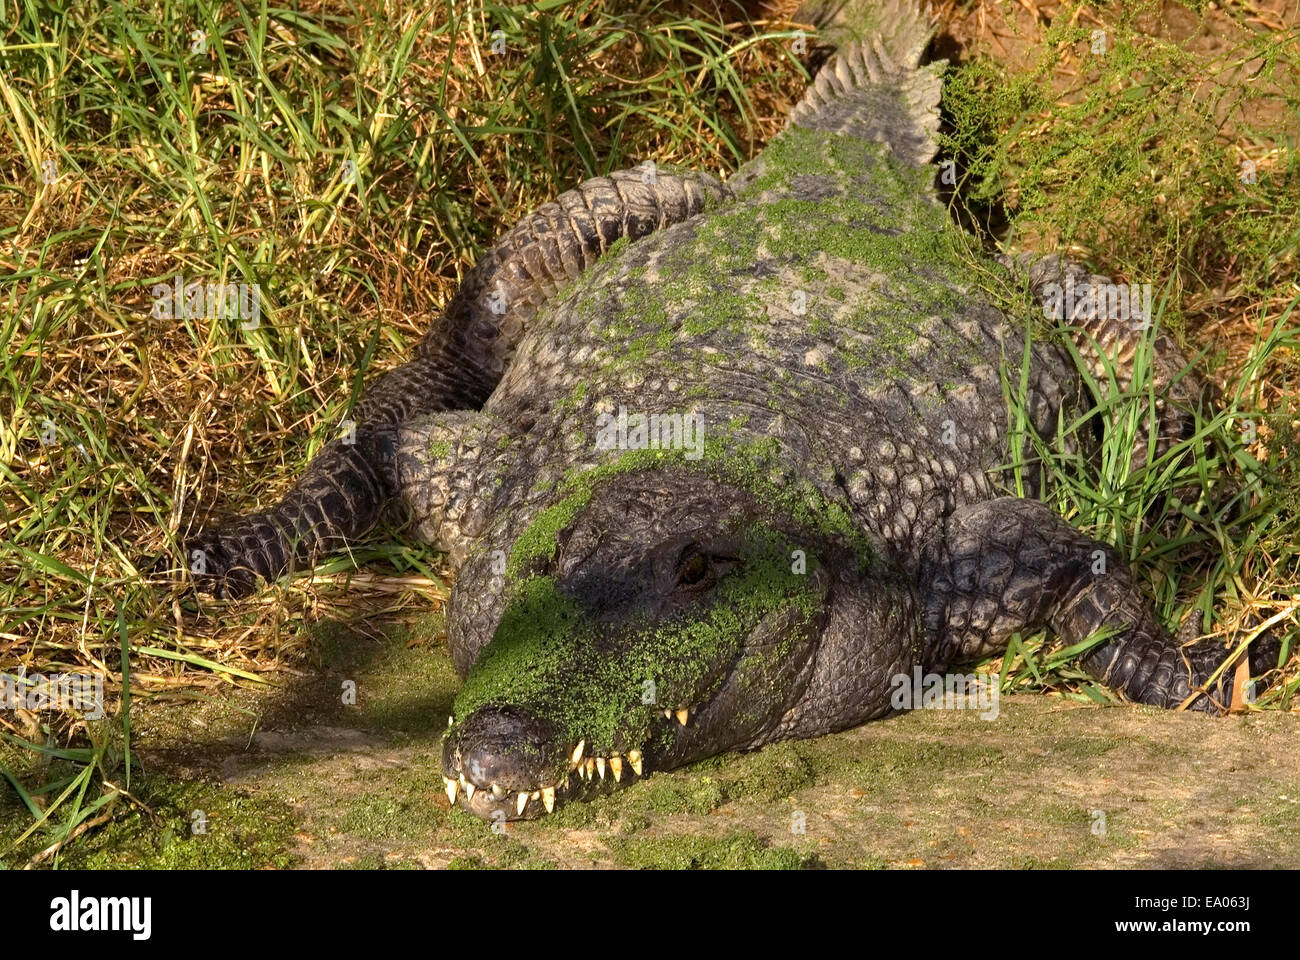 Crocodile basking in the sun Stock Photo